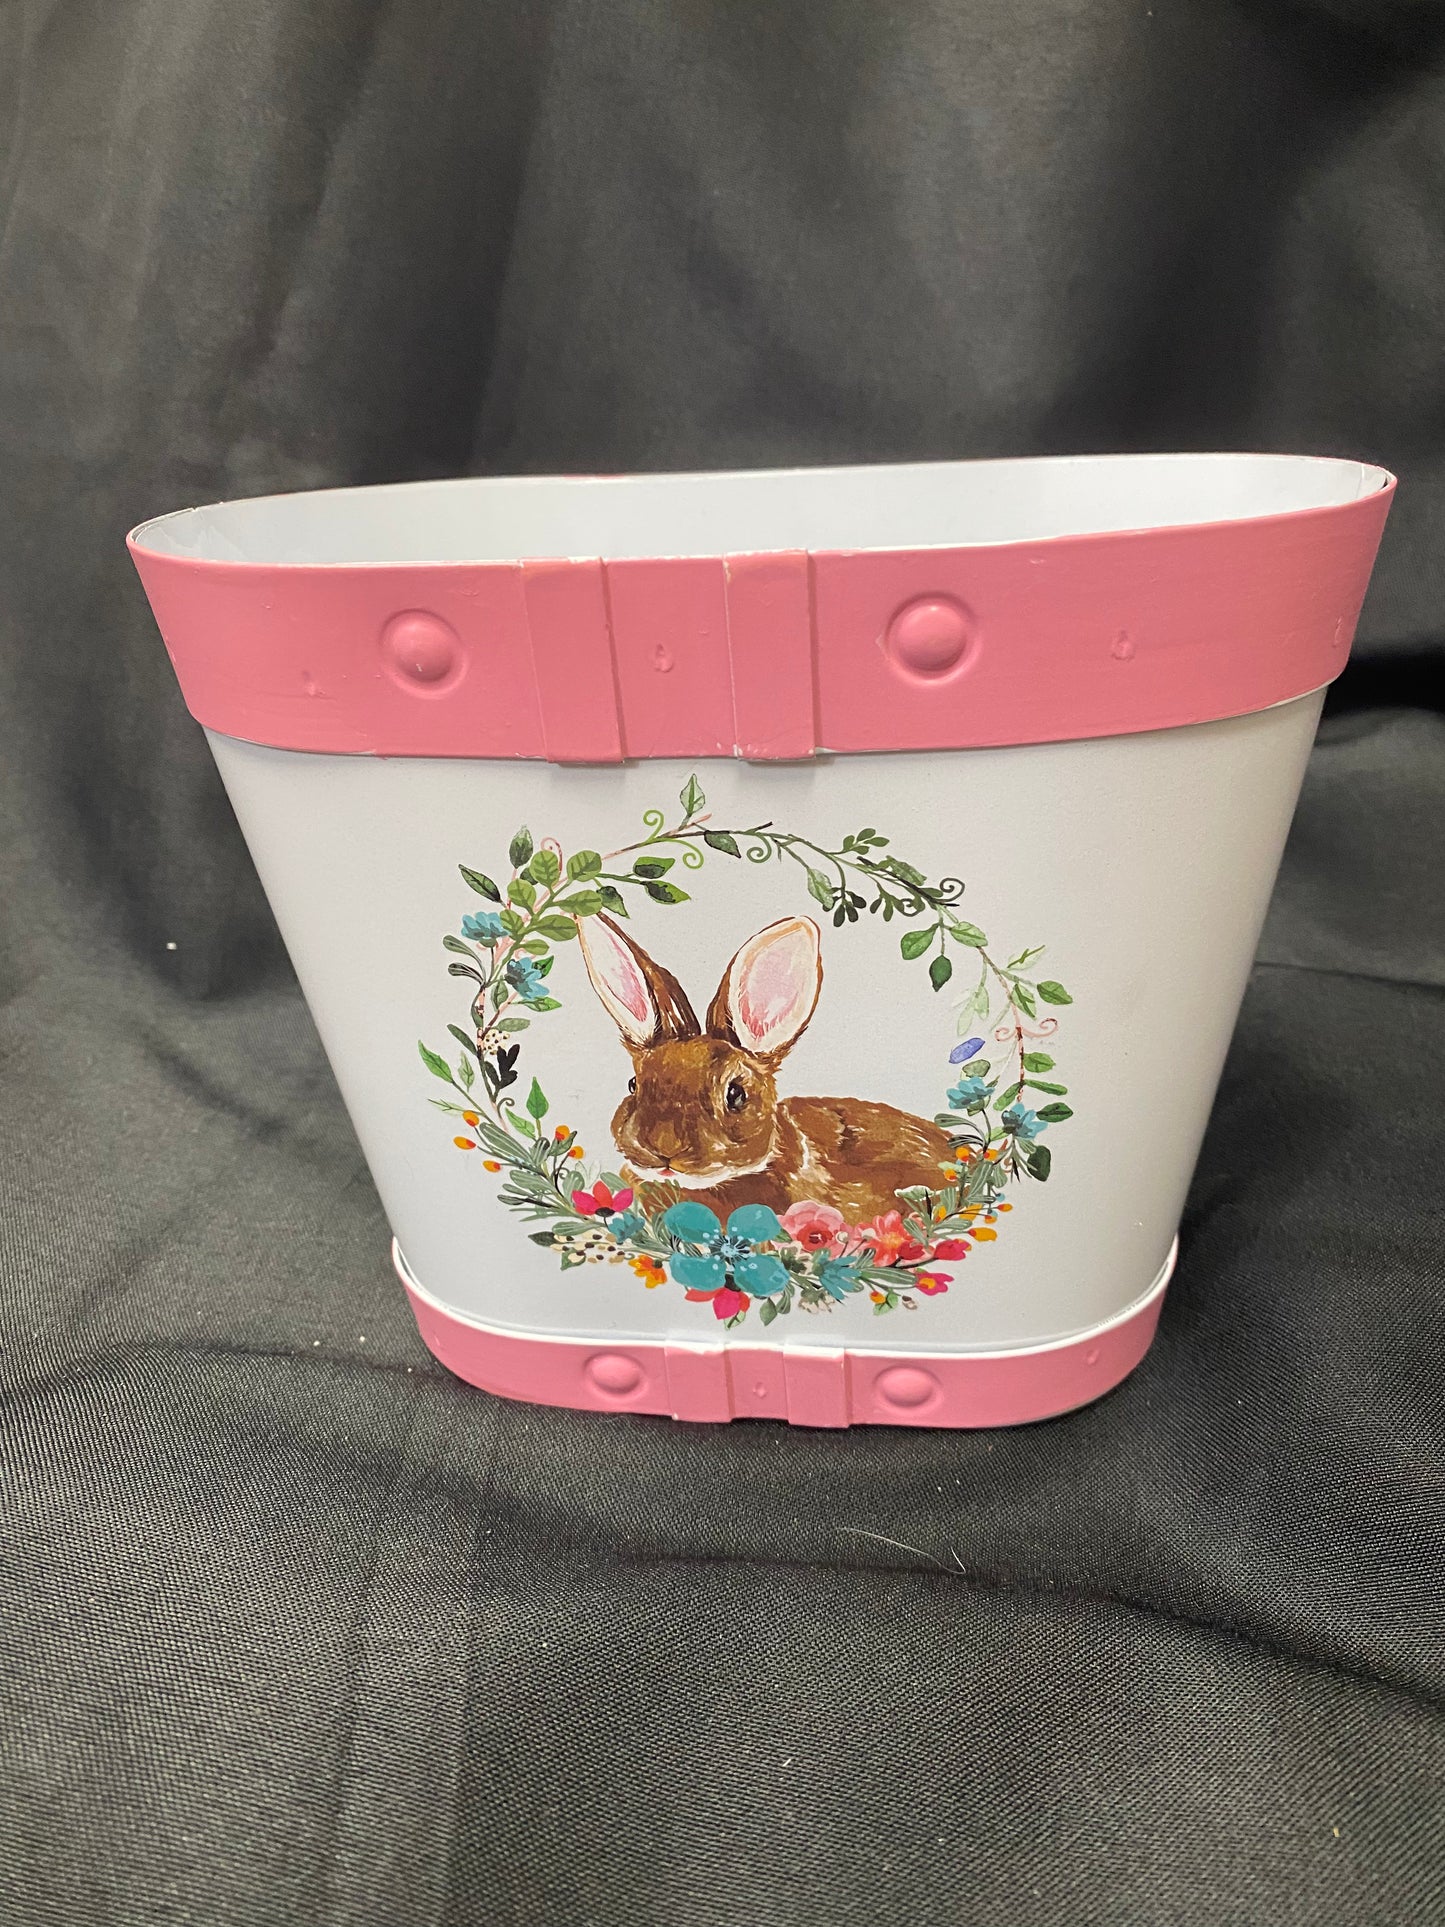 Bunny Bucket